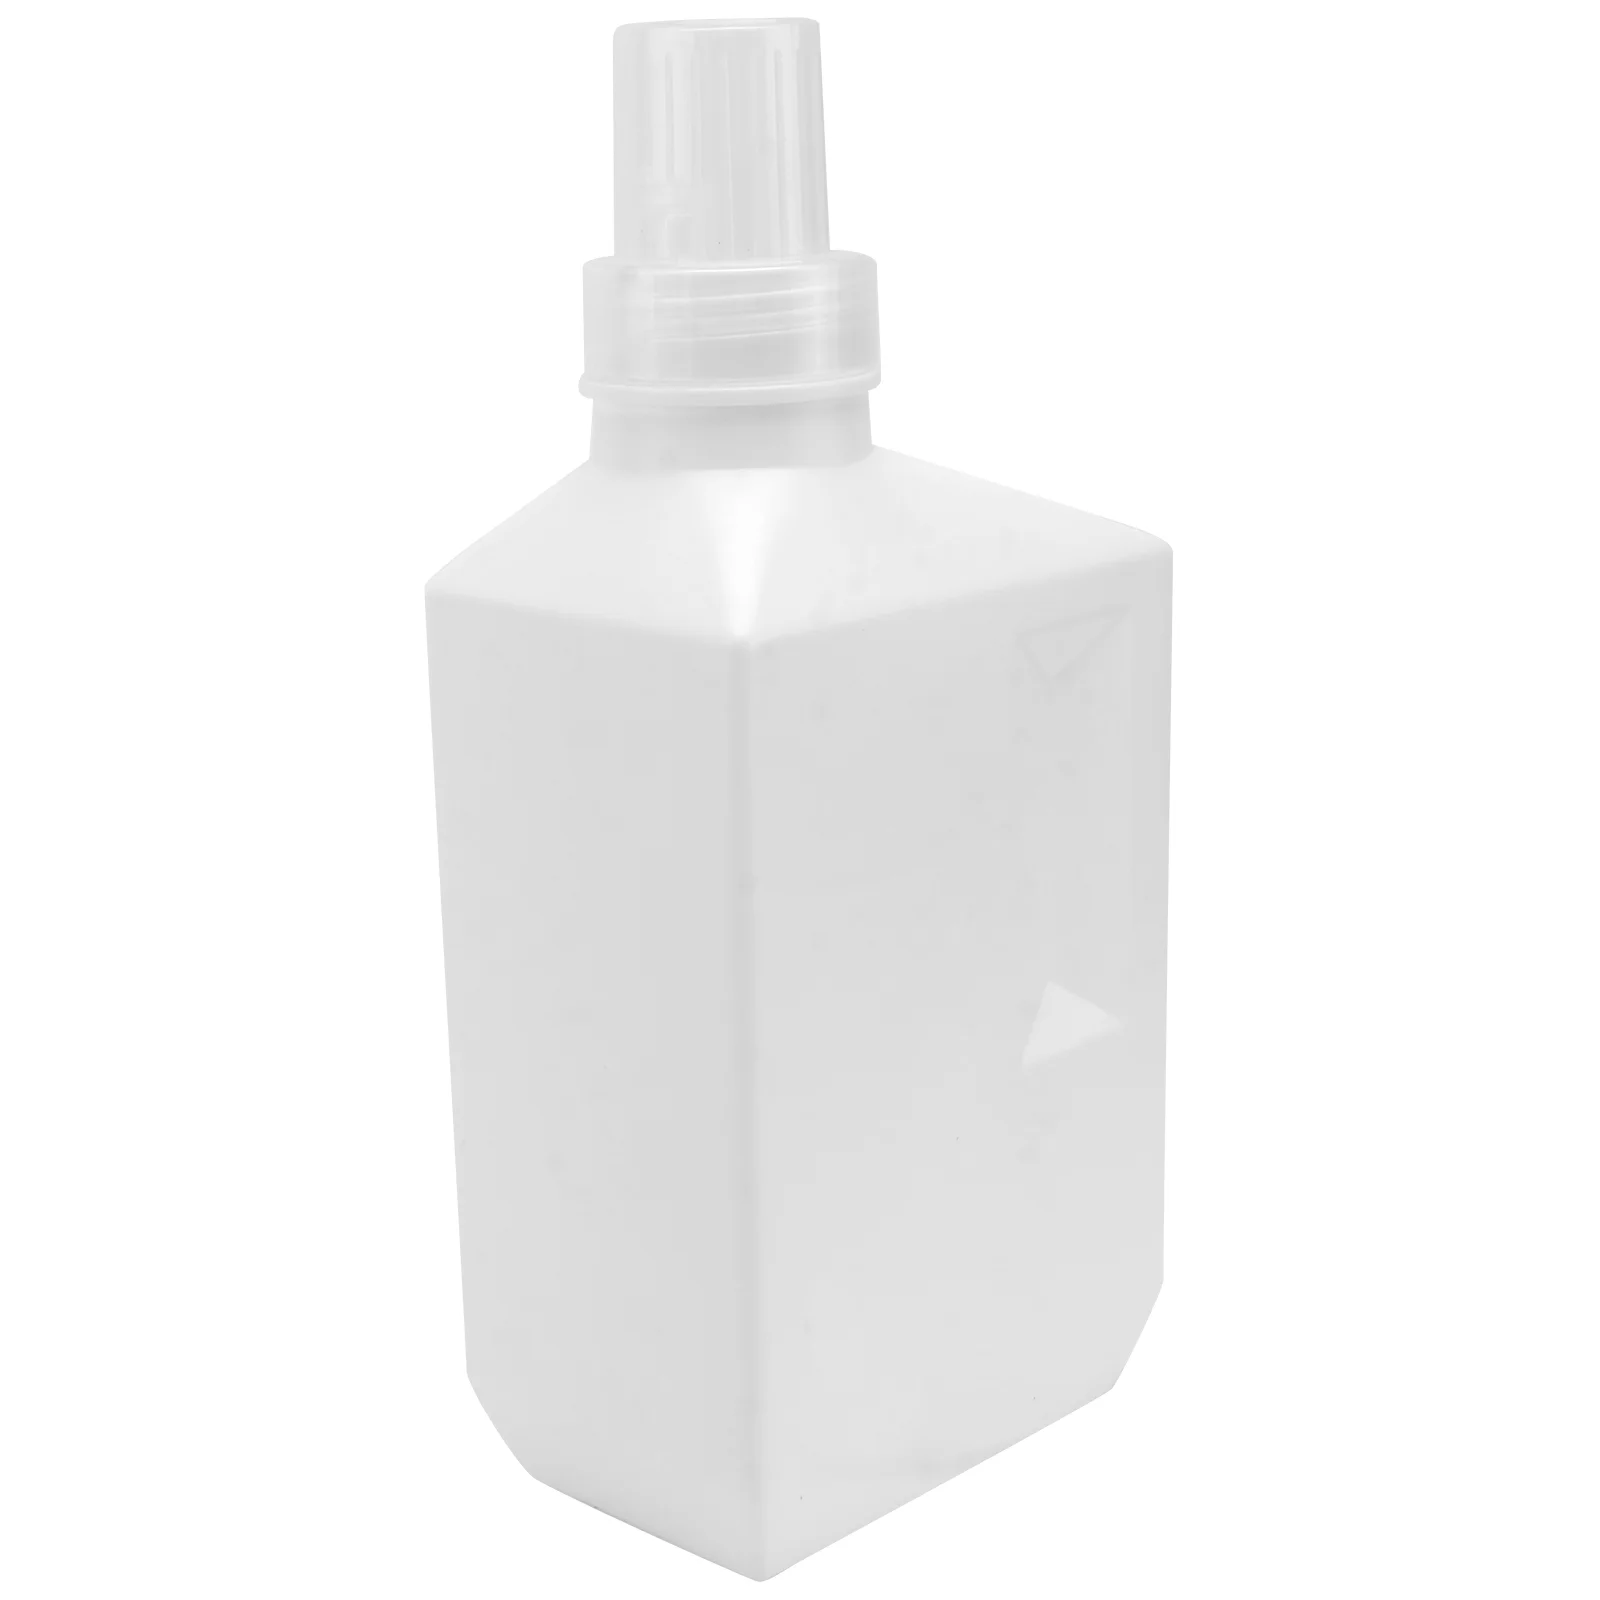 

Bottle Laundry Dispenser Liquid Detergent Soap Emptylotion Container Refillable Holder Wash Bottles Body Pump Clear Containers